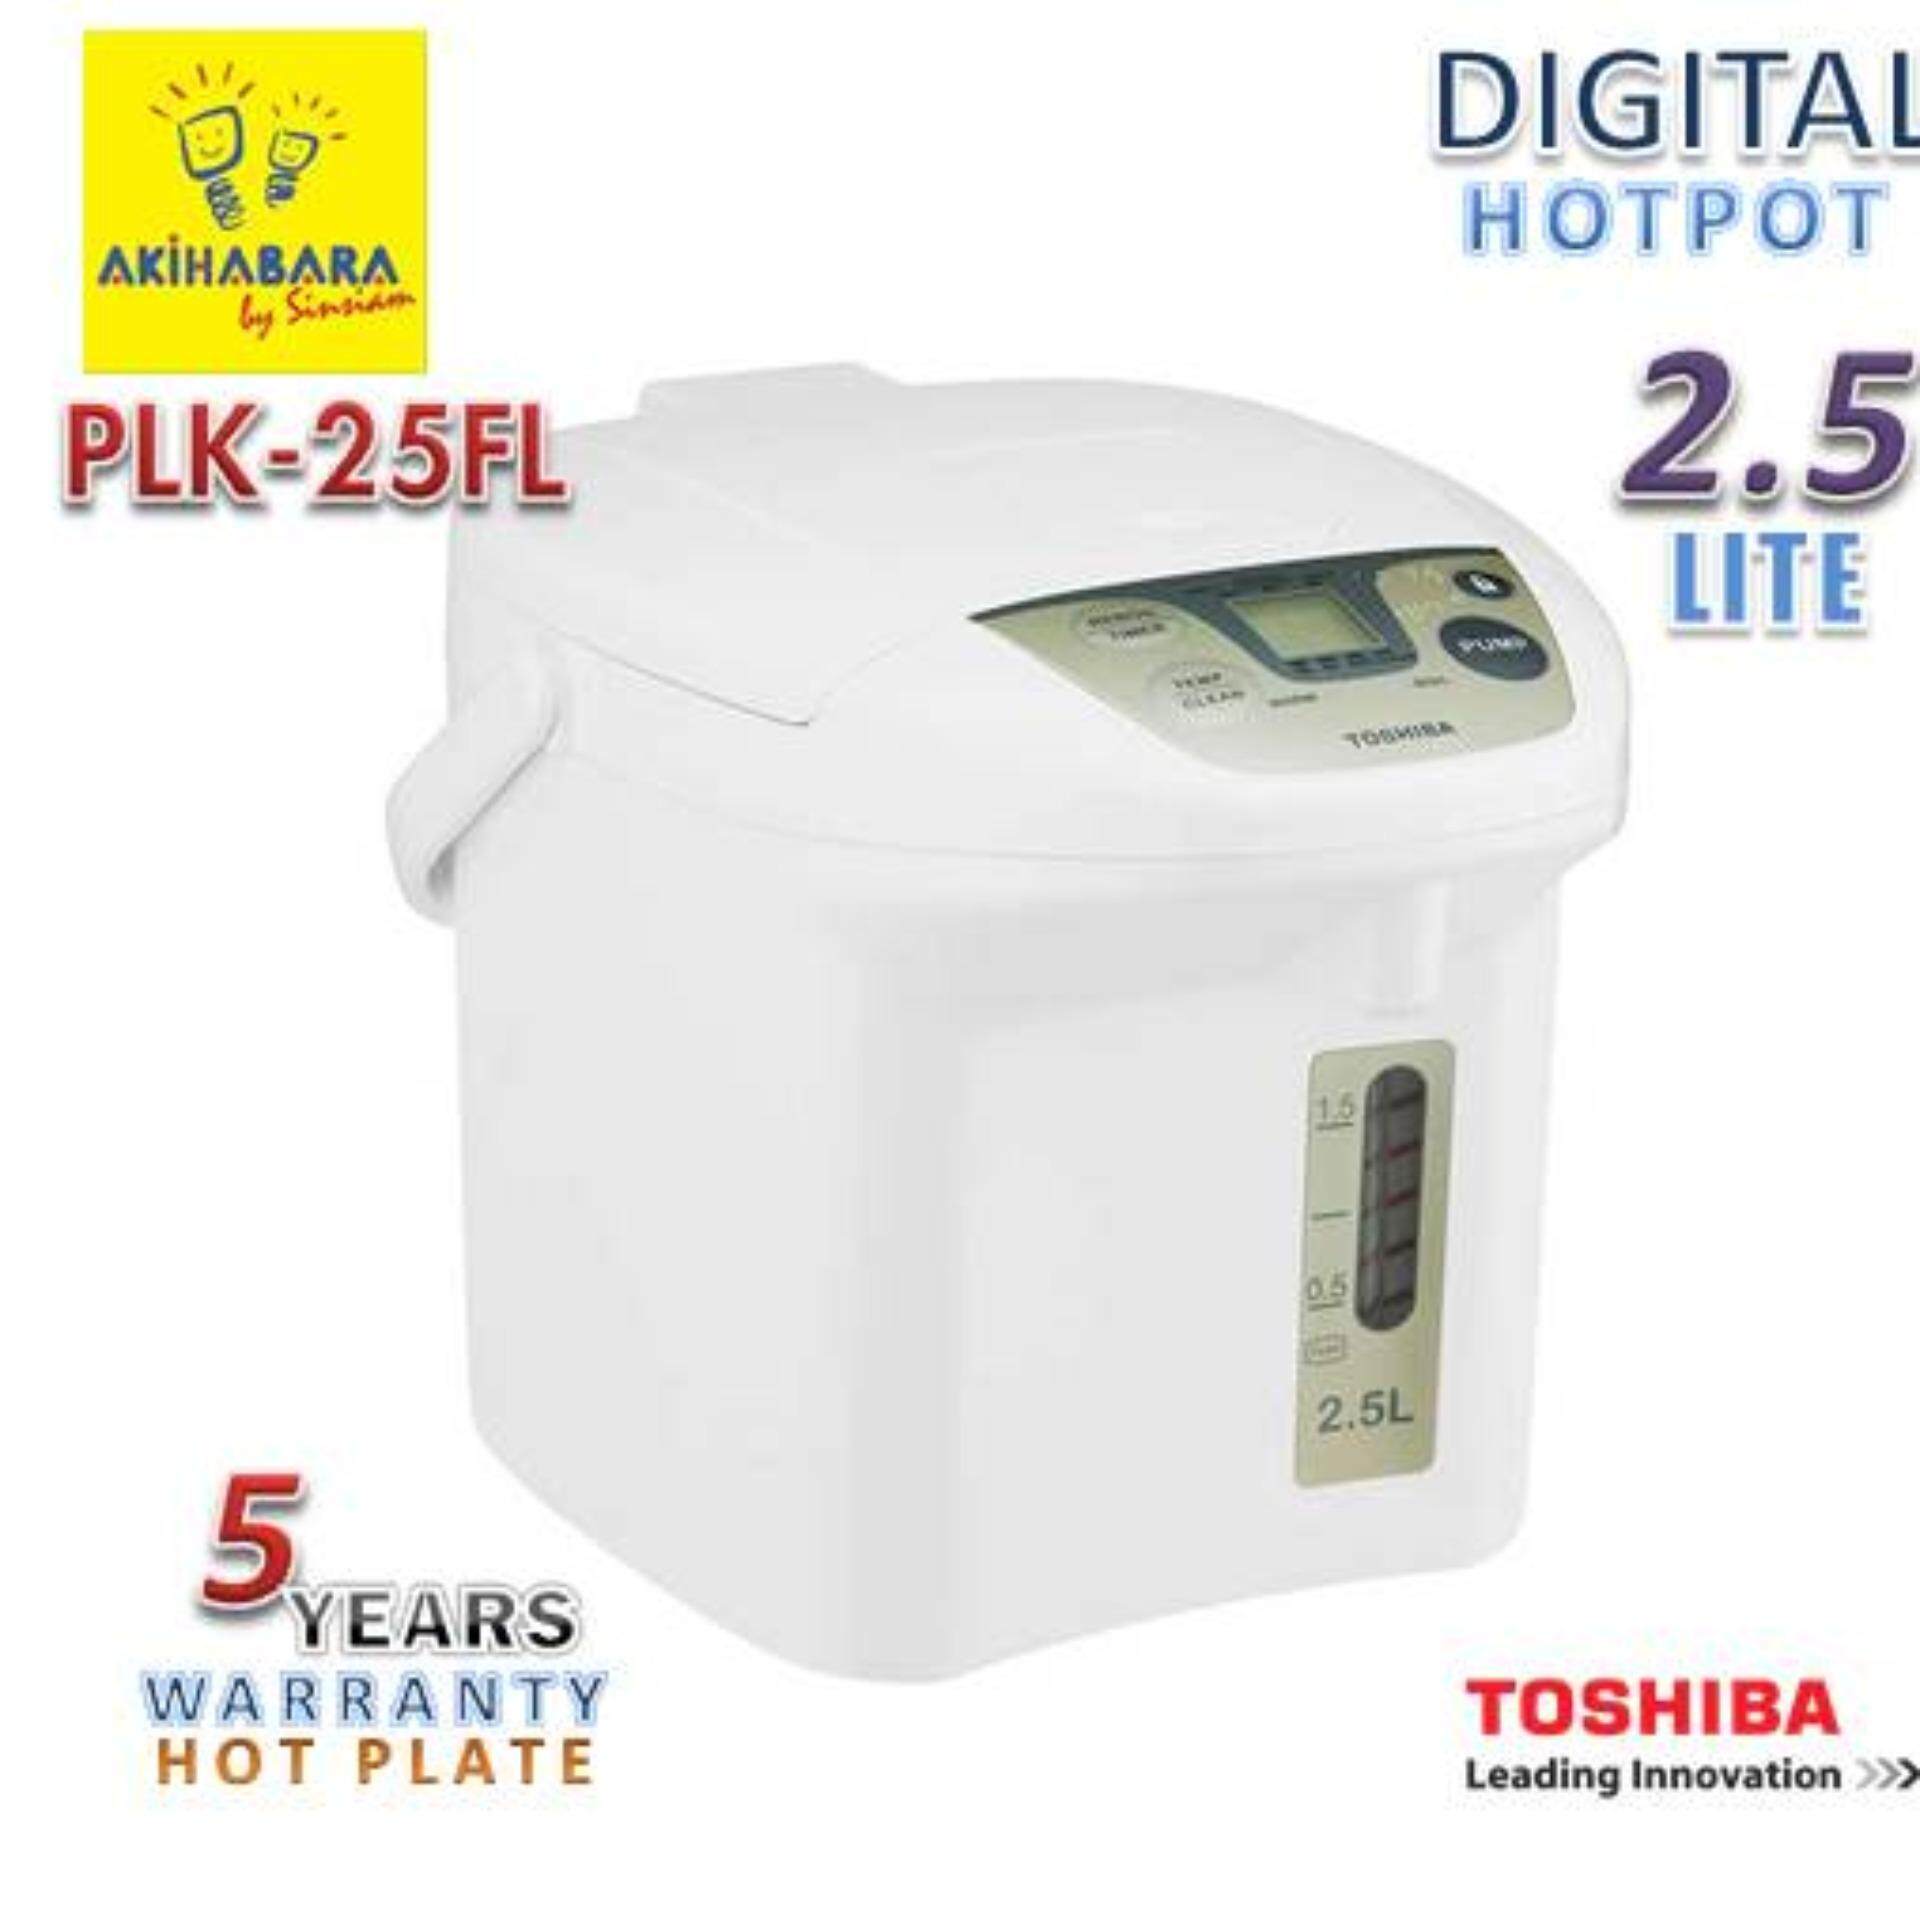 TOSHIBA กระติกน้ำร้อนดิจิตอล ขนาด 2.5 ลิตร รุ่น PLK-25FL(WT)A สีขาว